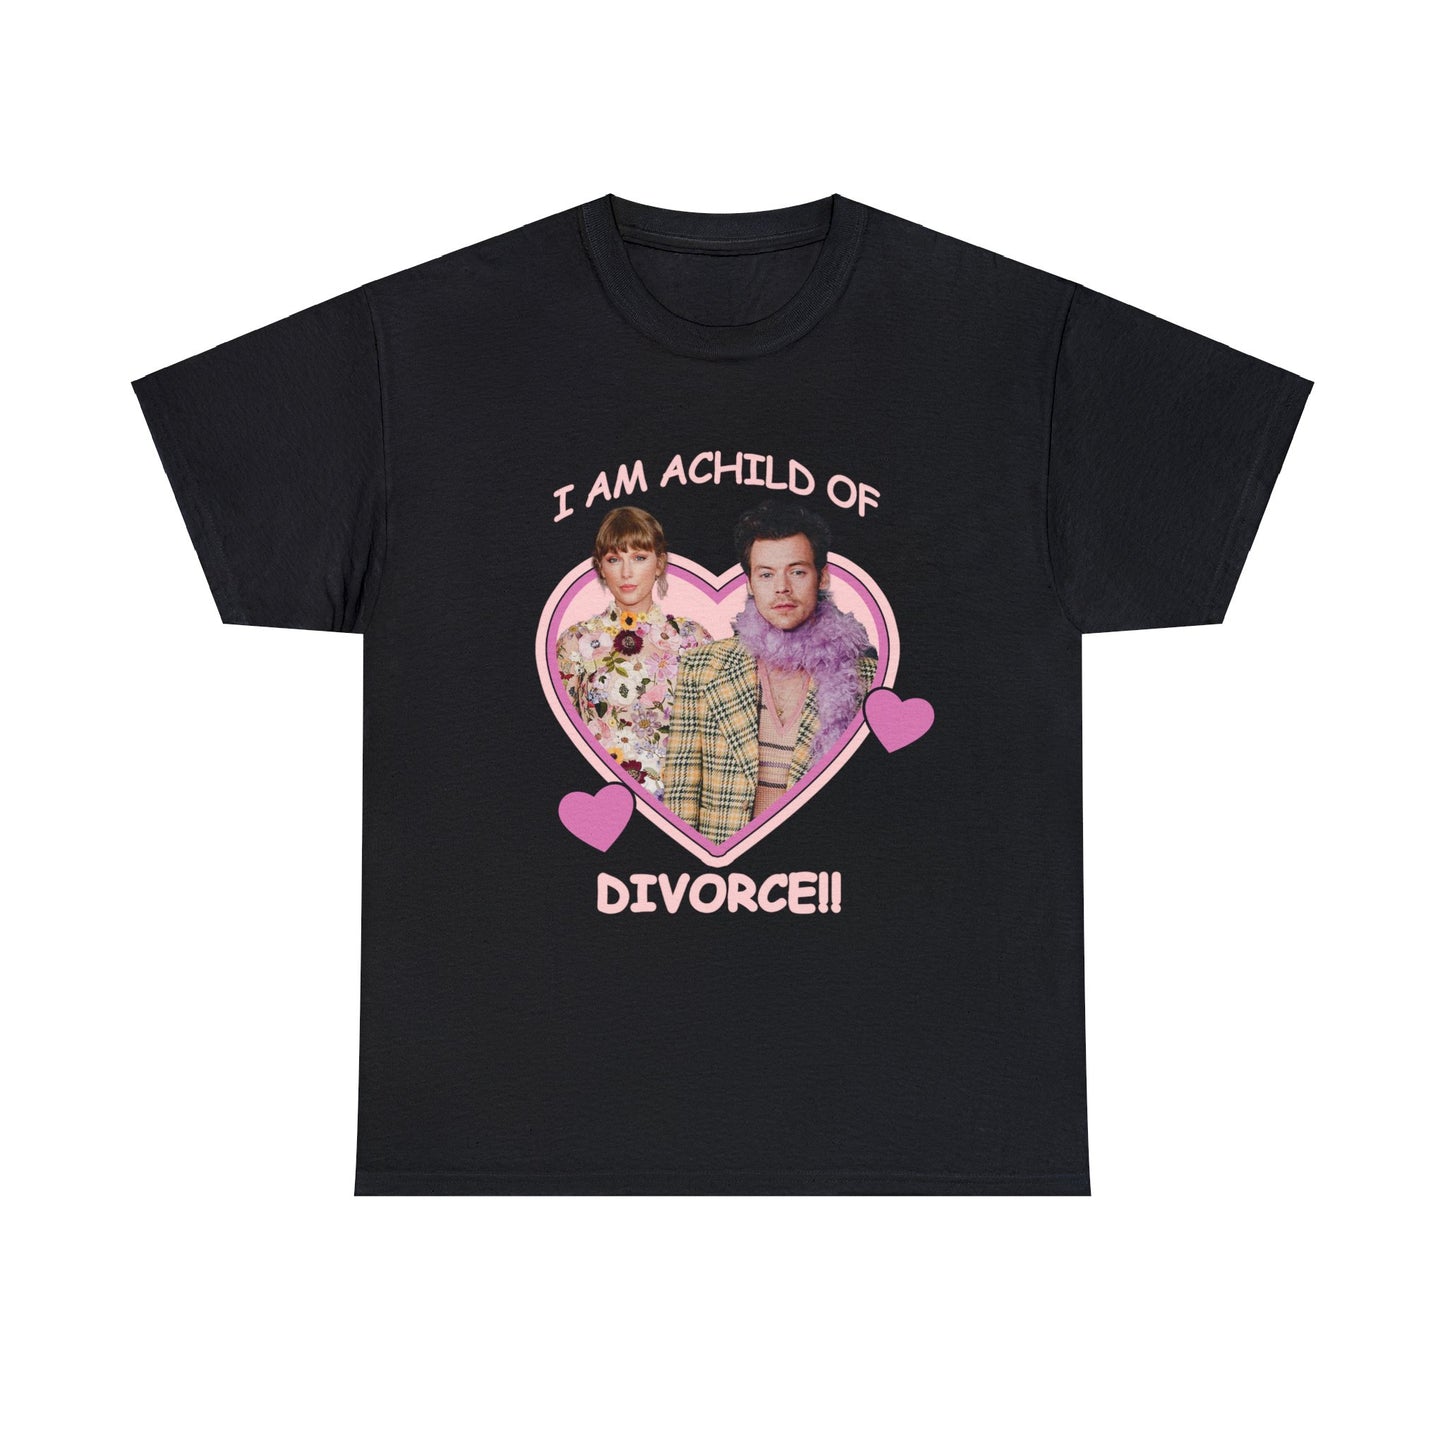 Child of Divorce T-Shirt